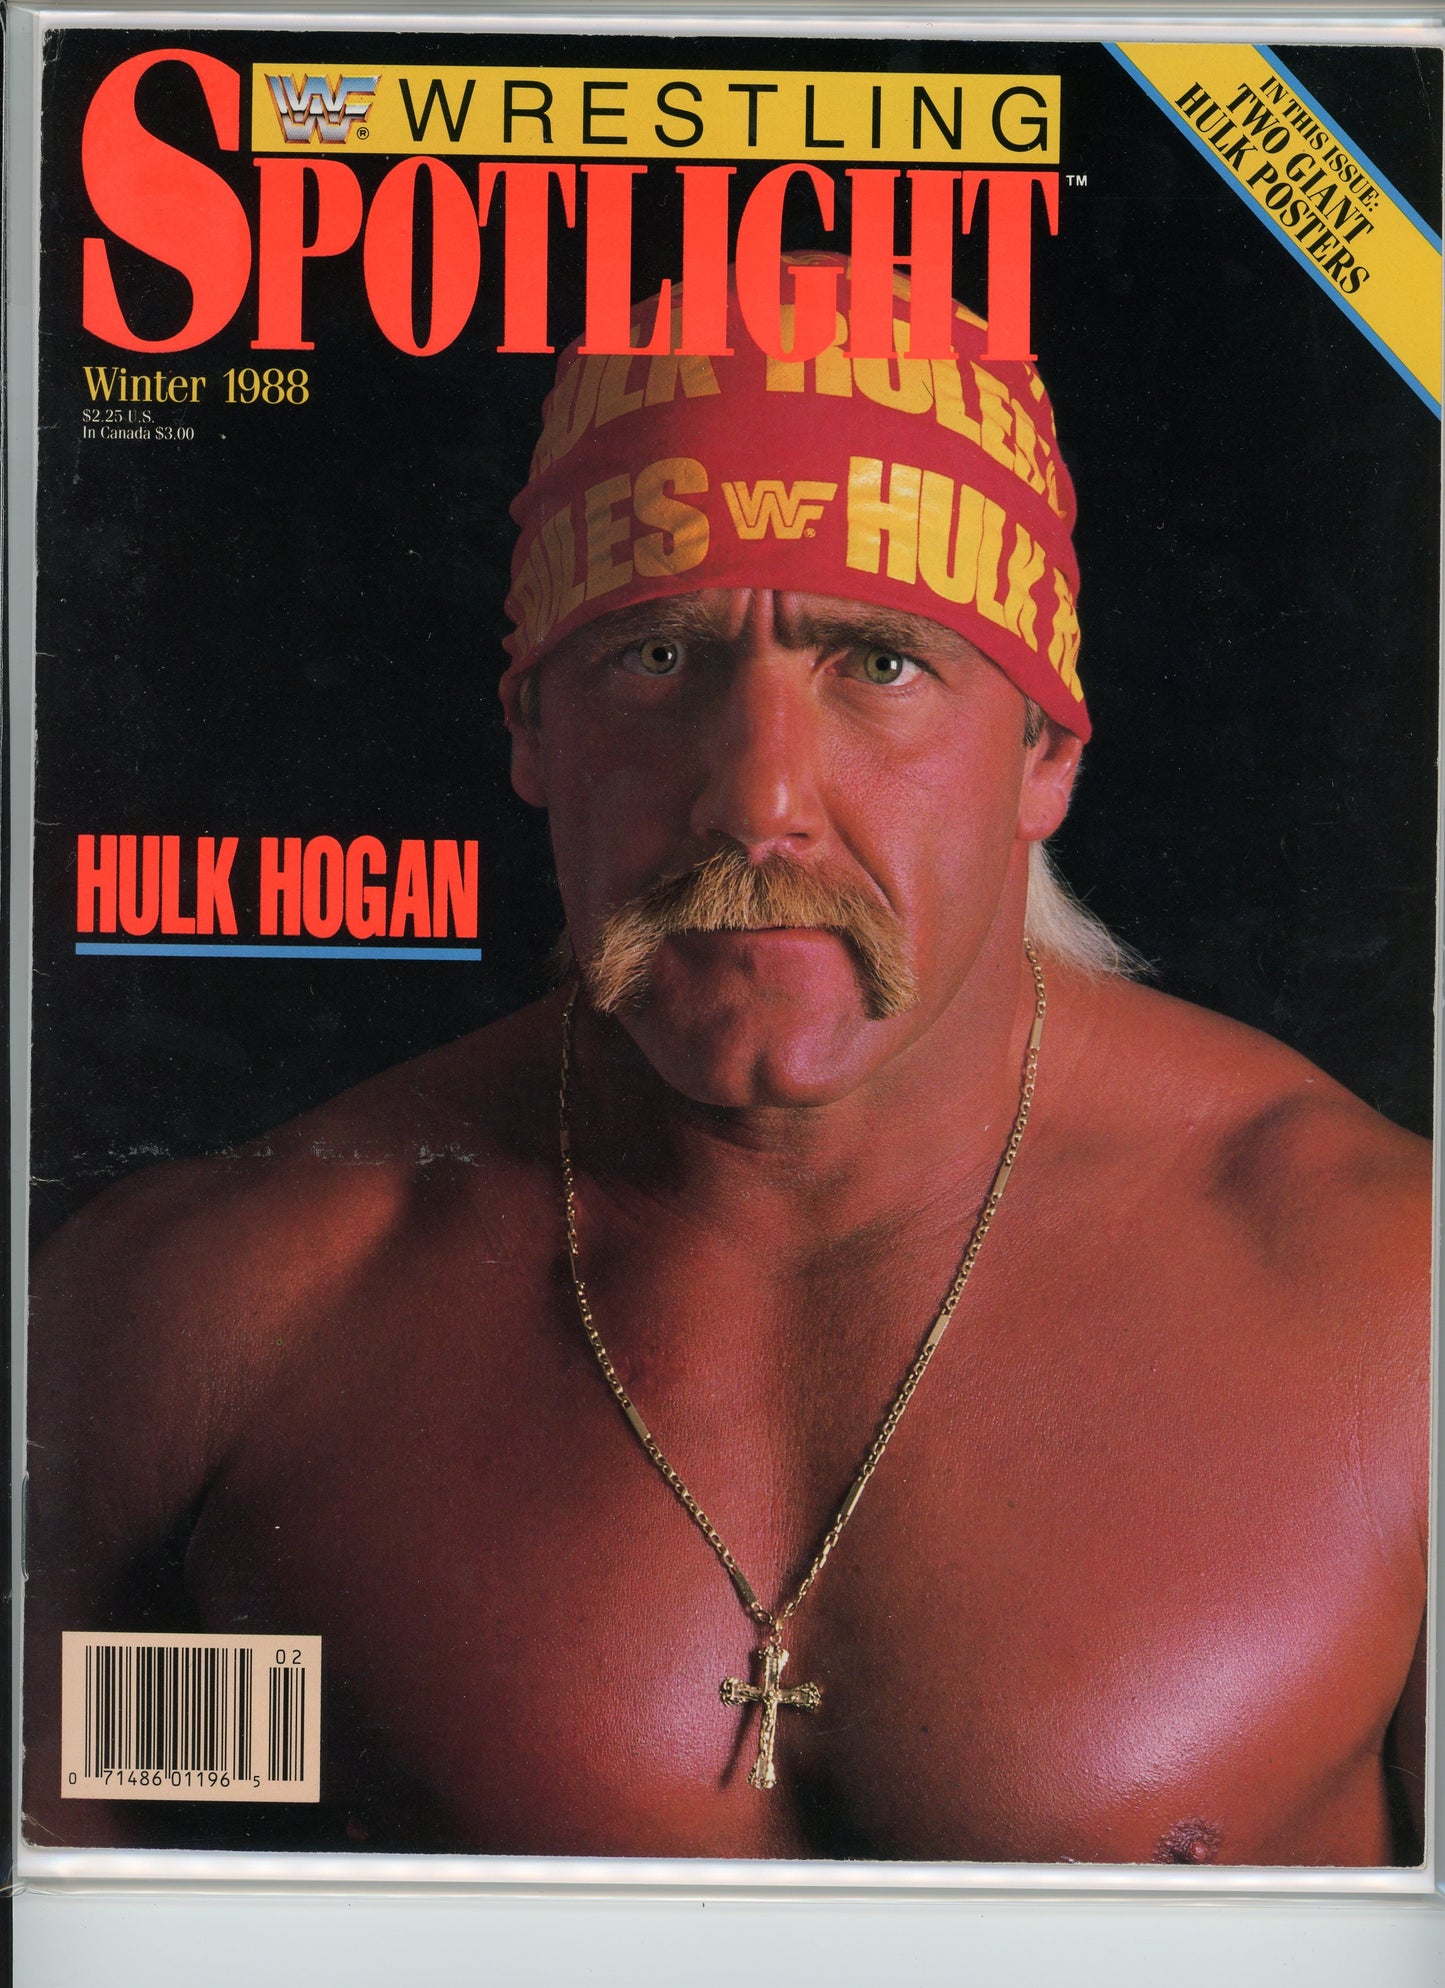 WWF Wrestling Spotlight Magazine (Winter 1988) Hulk Hogan